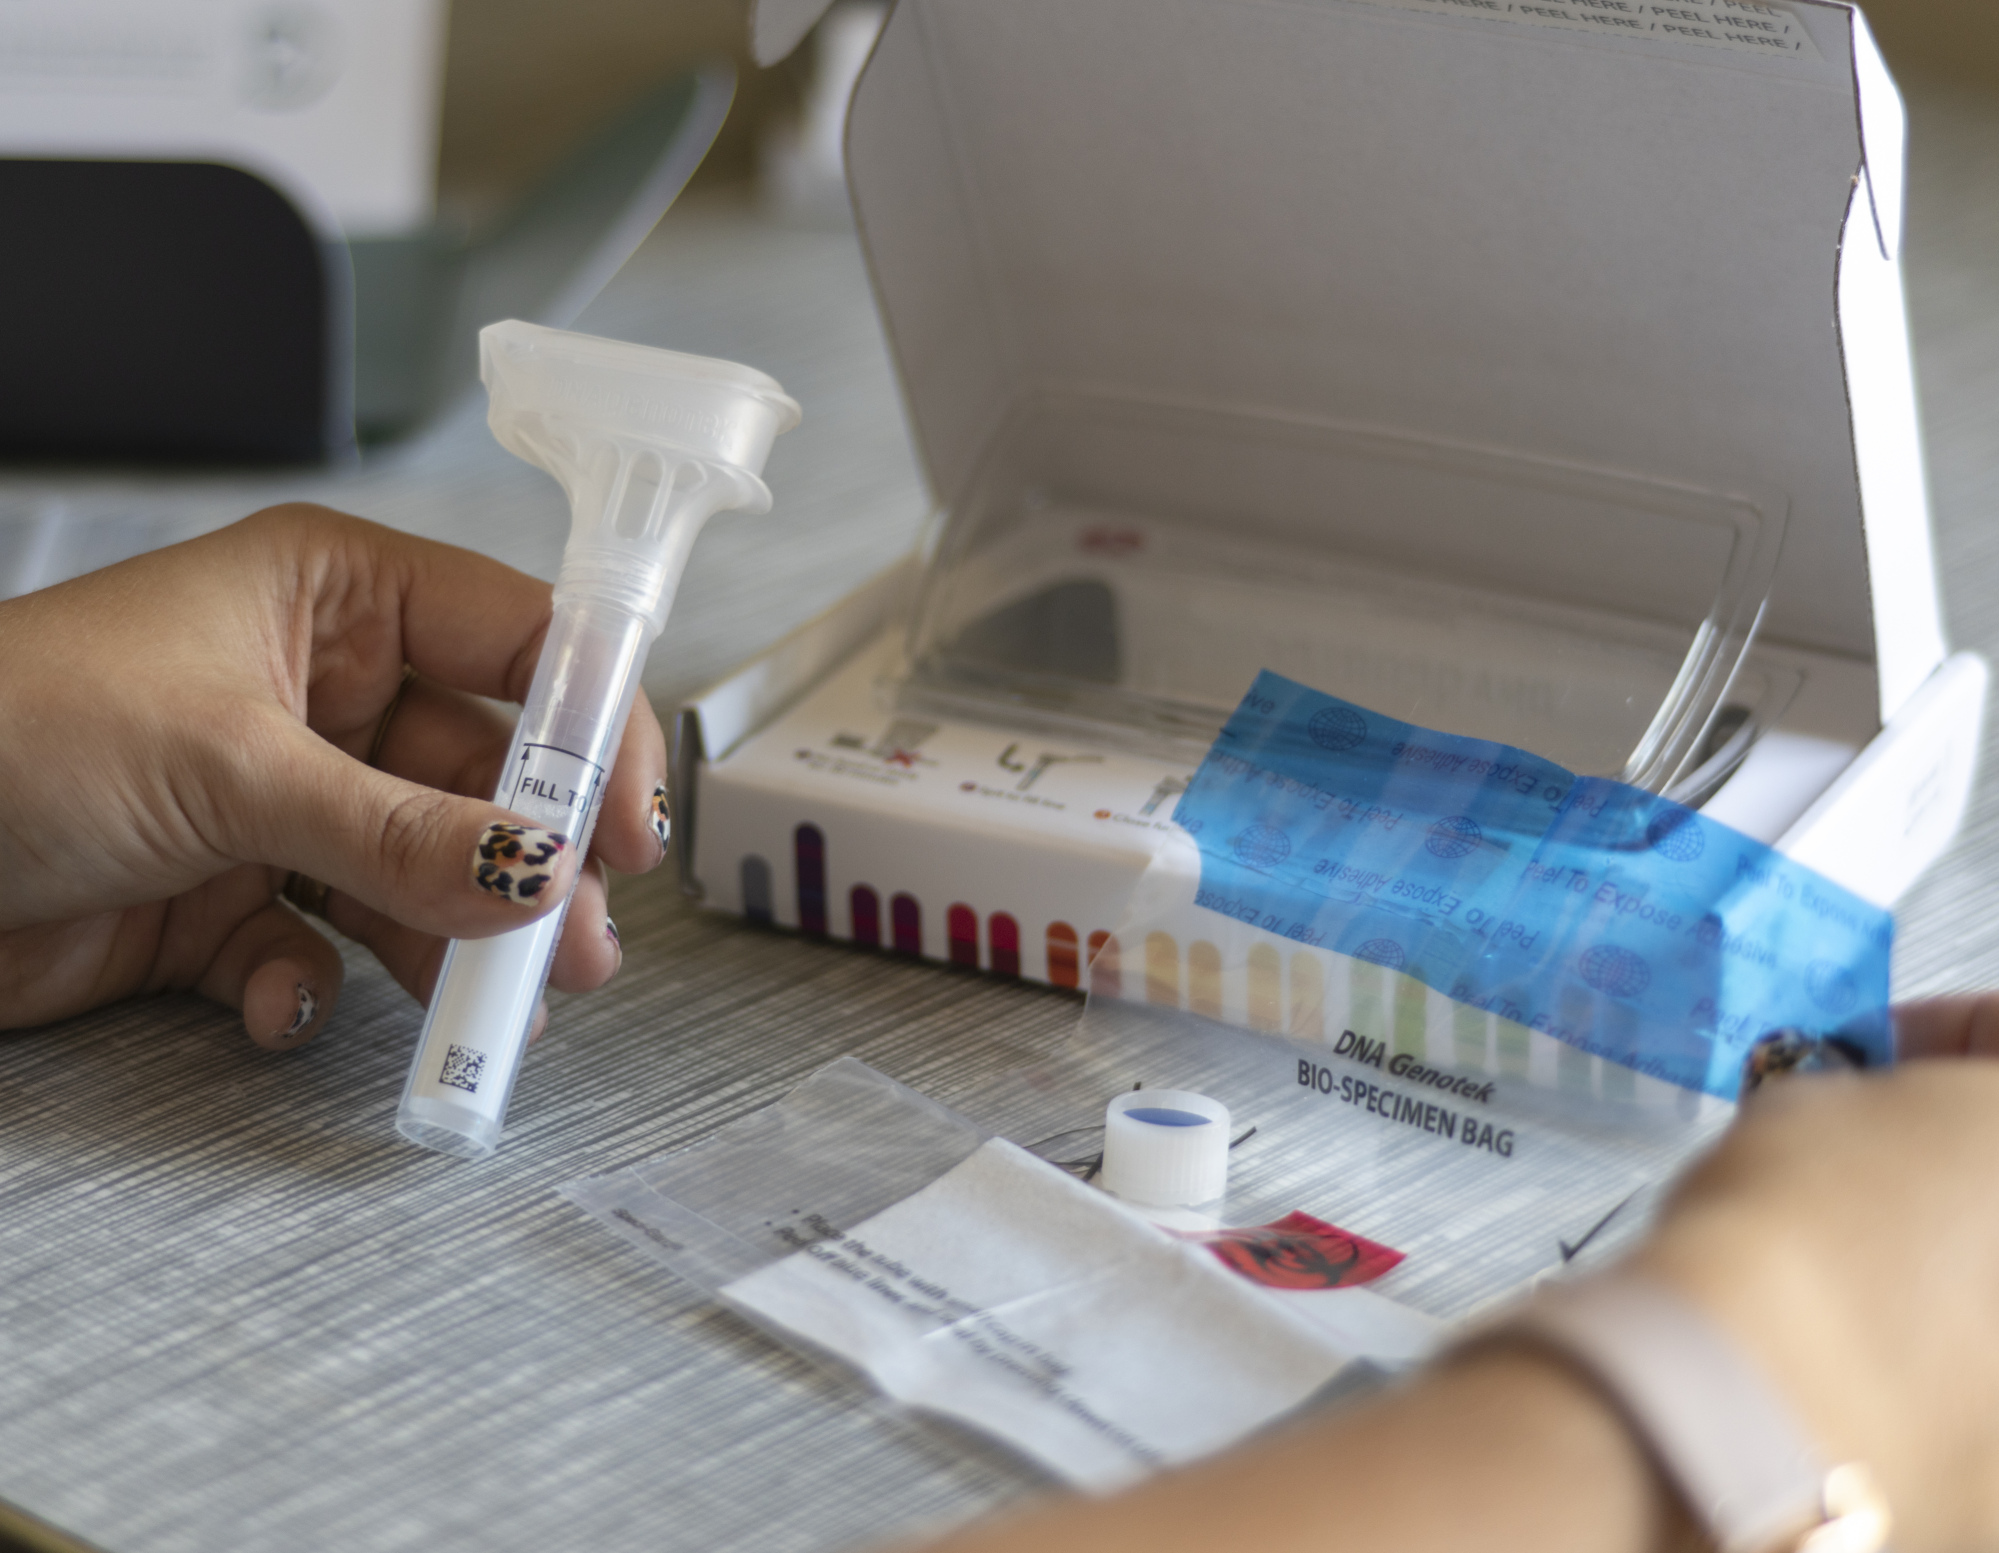 A &nbsp;23andMe&nbsp;Inc. DNA genetic testing kit.